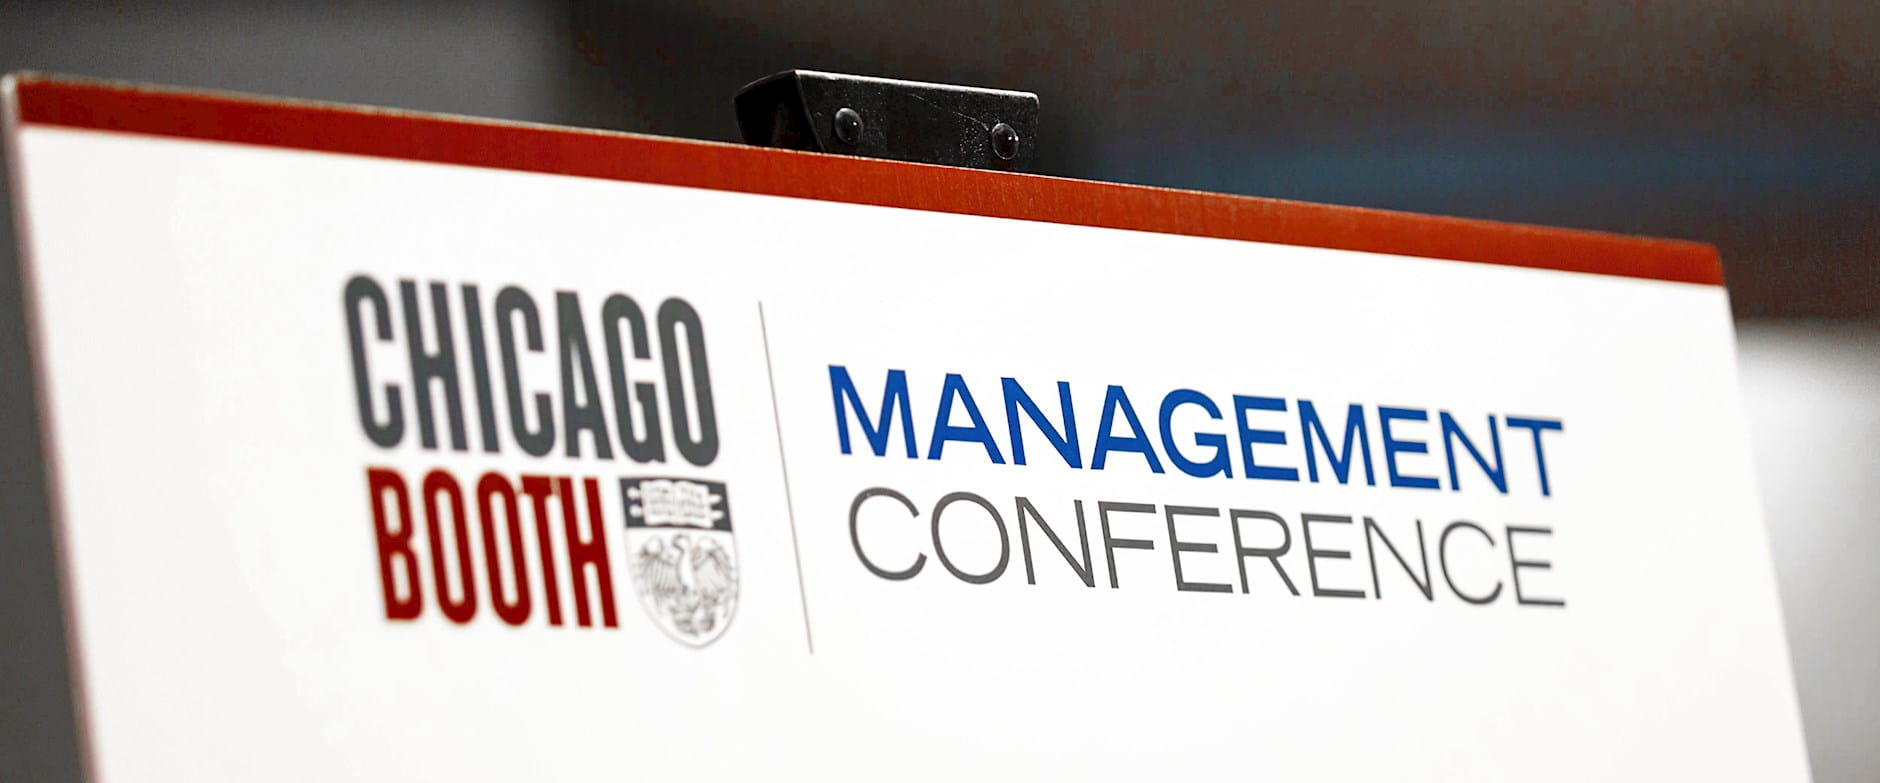 Management Conference Sign